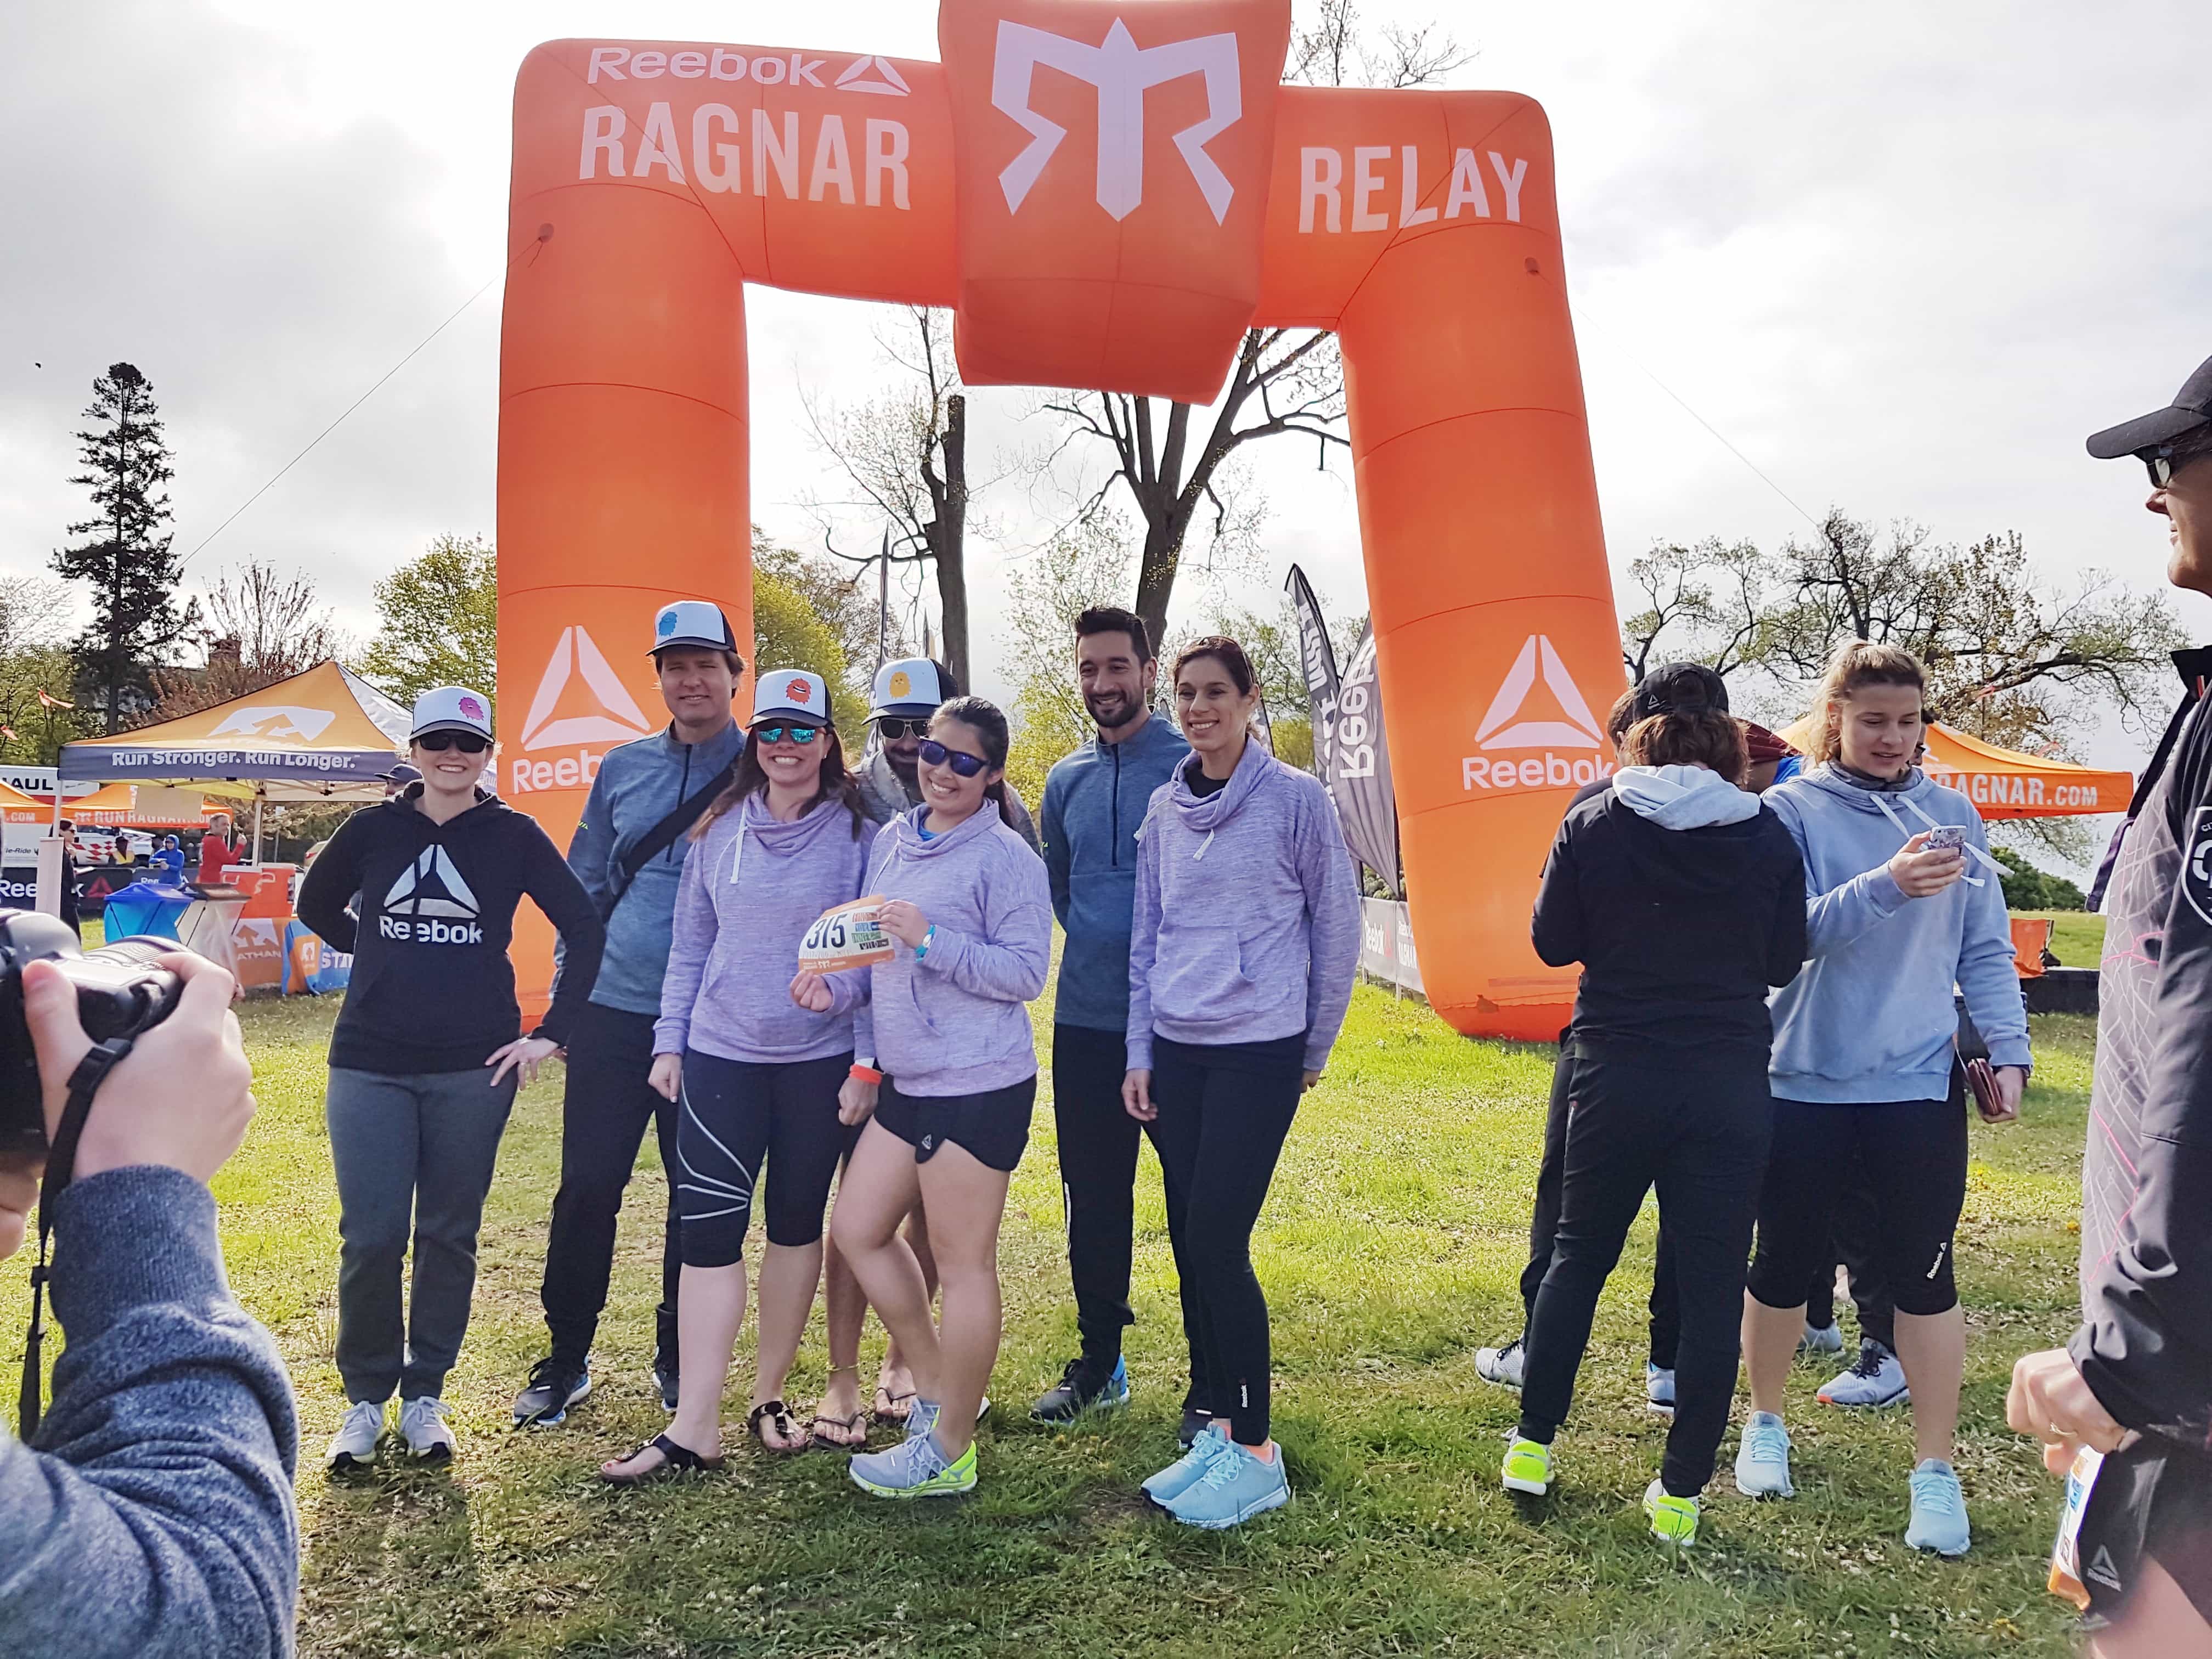 Ragnar Relay Niagara team group photo start line. Ragnar Relay Photos